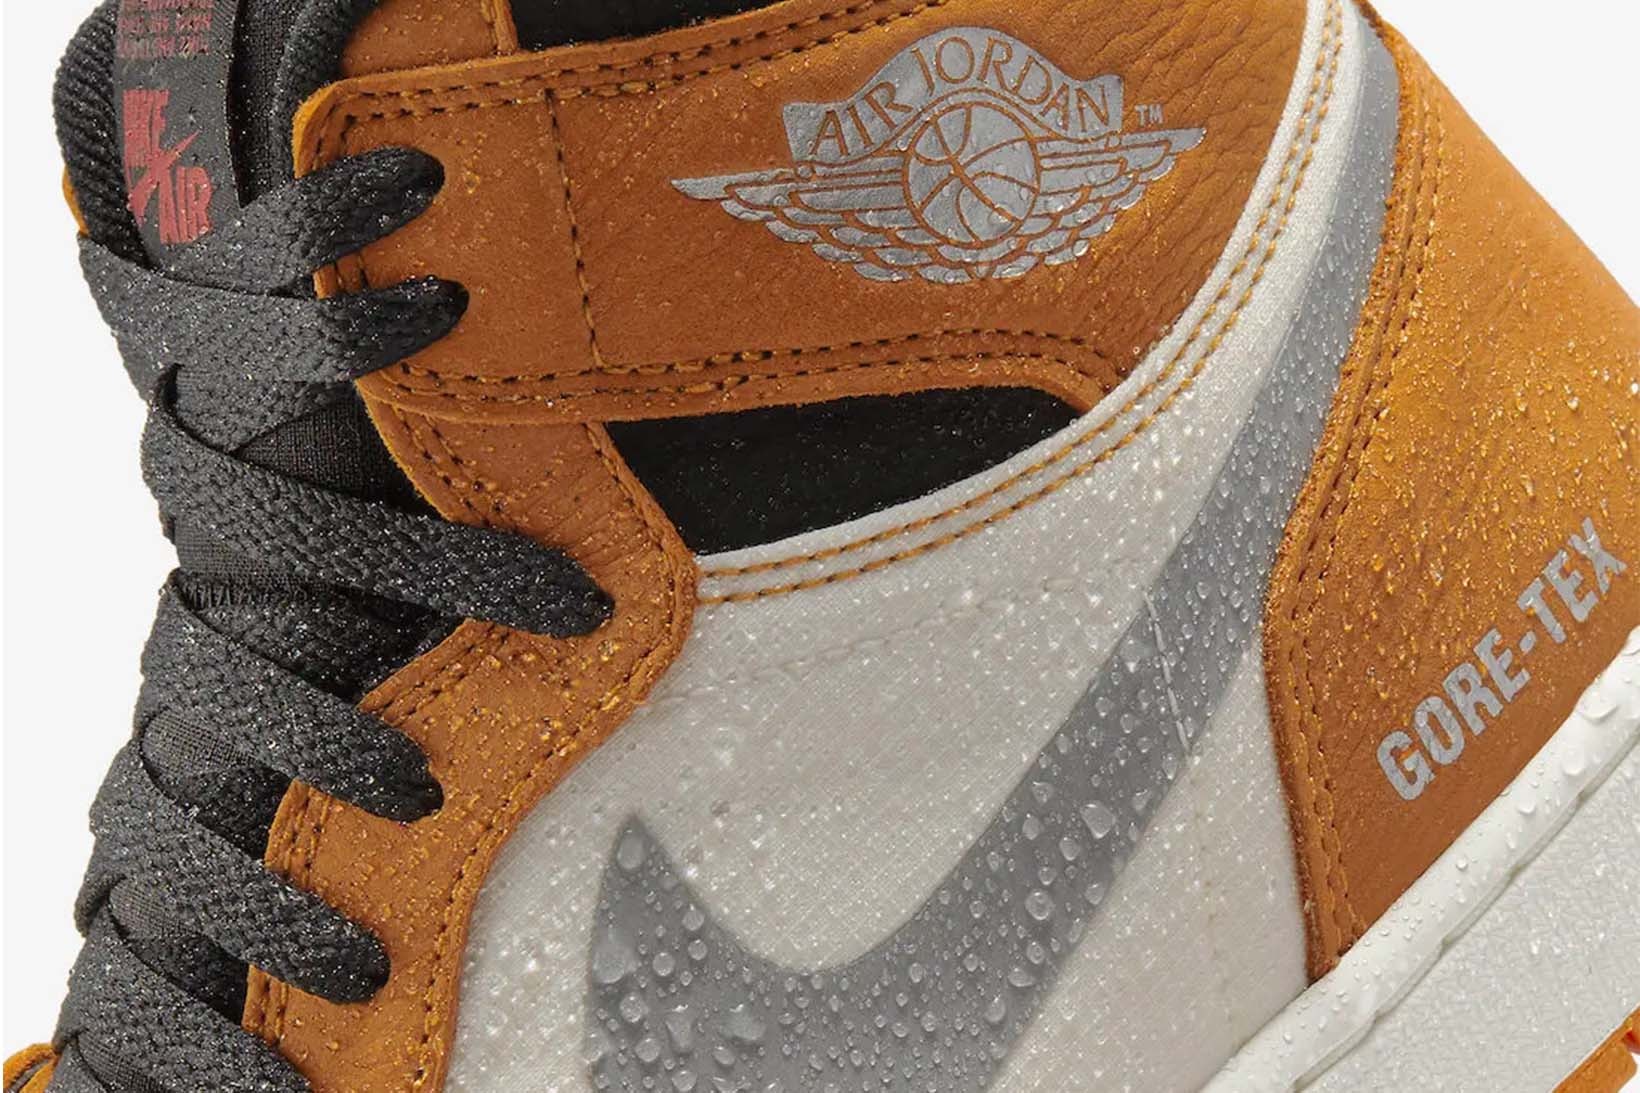 Sneaker Release Calendar Nike Air Jordan New Balance adidas Yeezy Release Info Price Collaboration